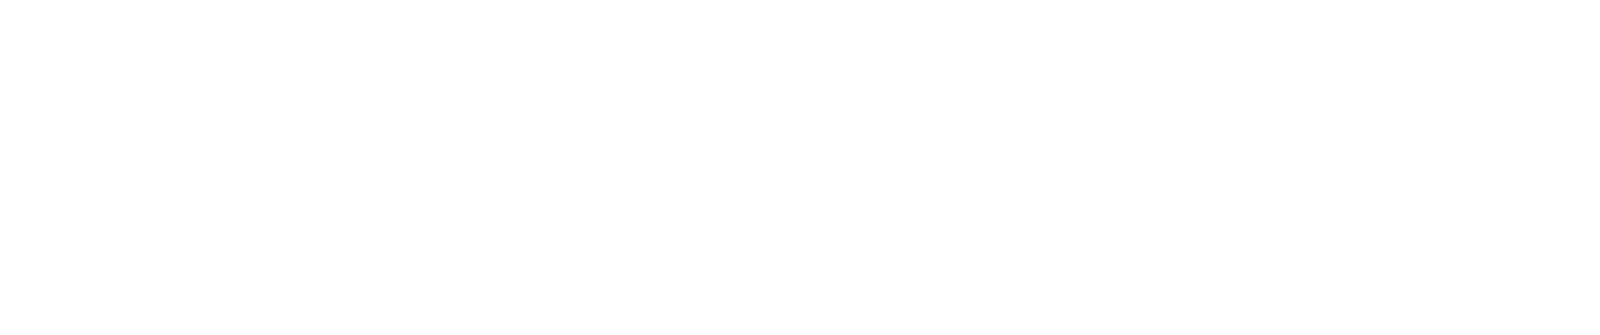 2017 Invincible Directed By joe jaeger